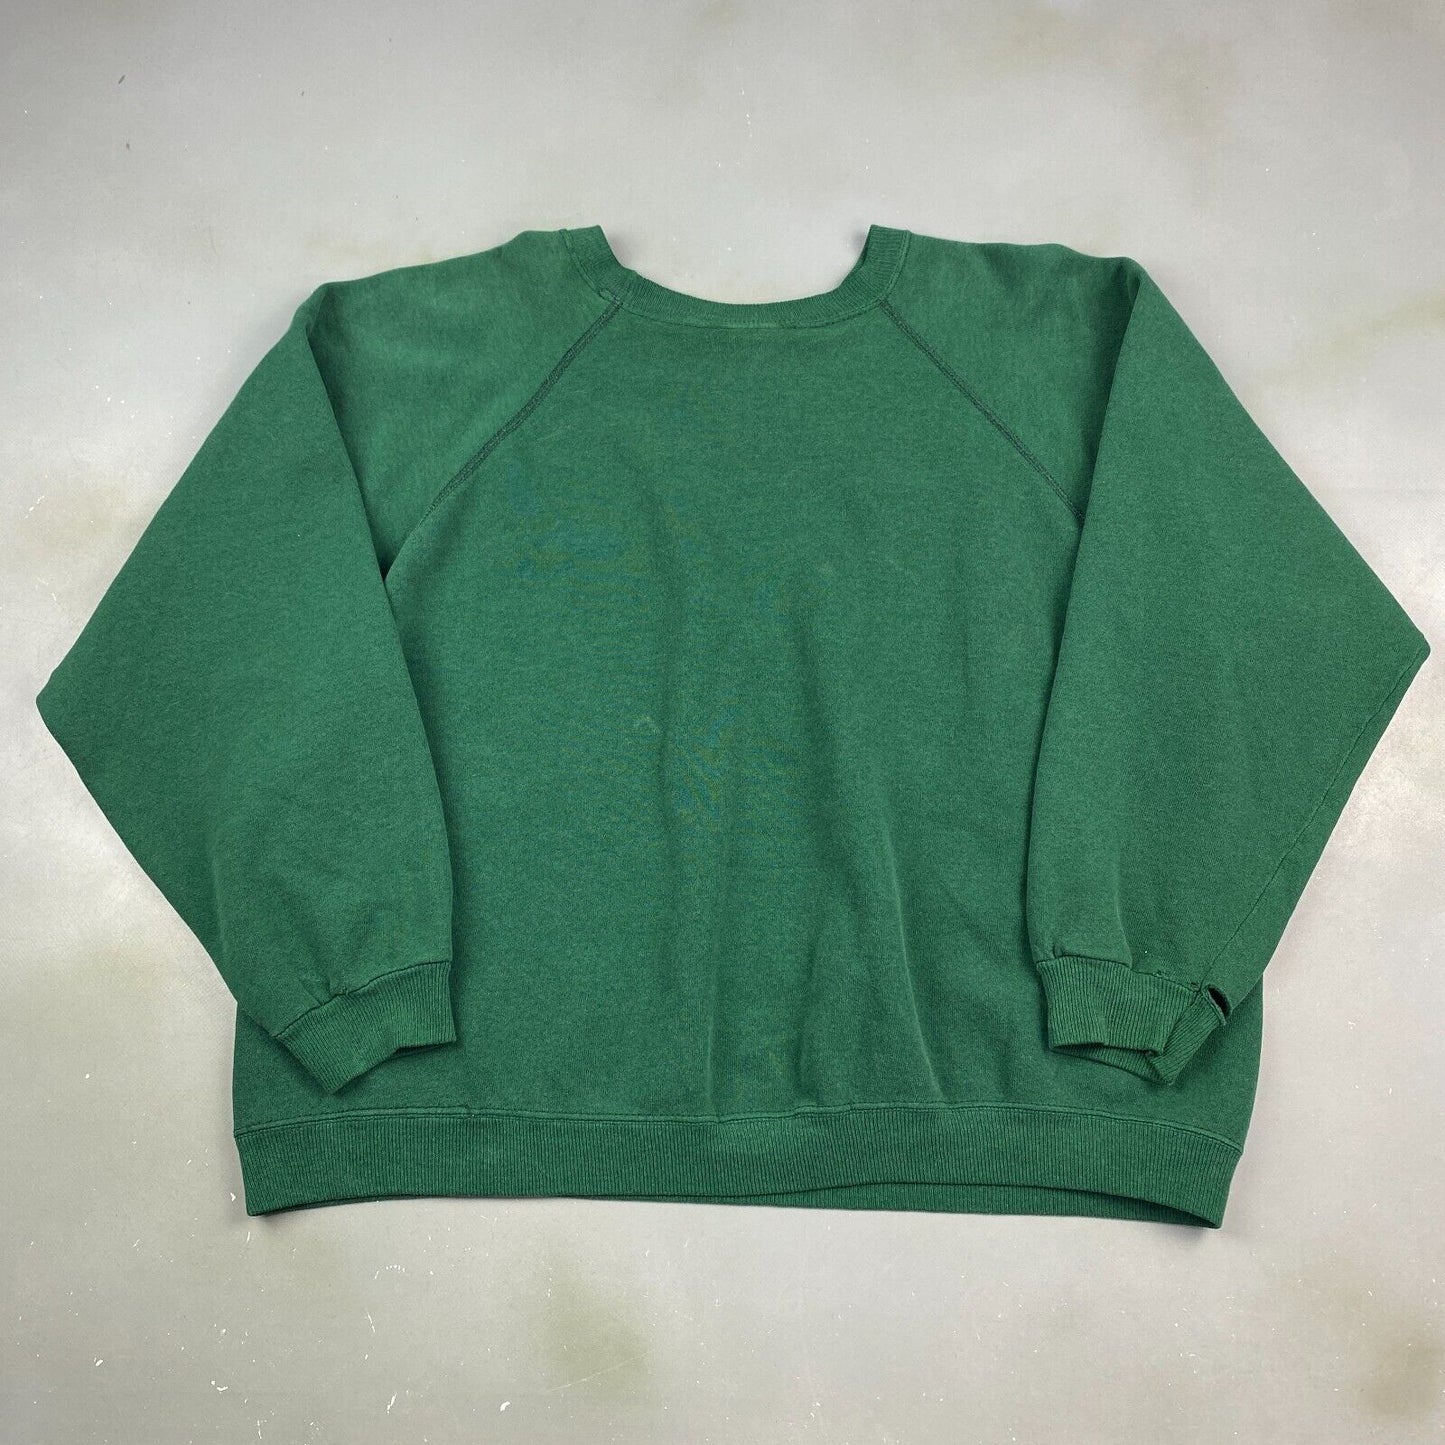 VINTAGE 90s Hanes Blank Green Crewneck Sweater sz X-Large Men MadeinUSA